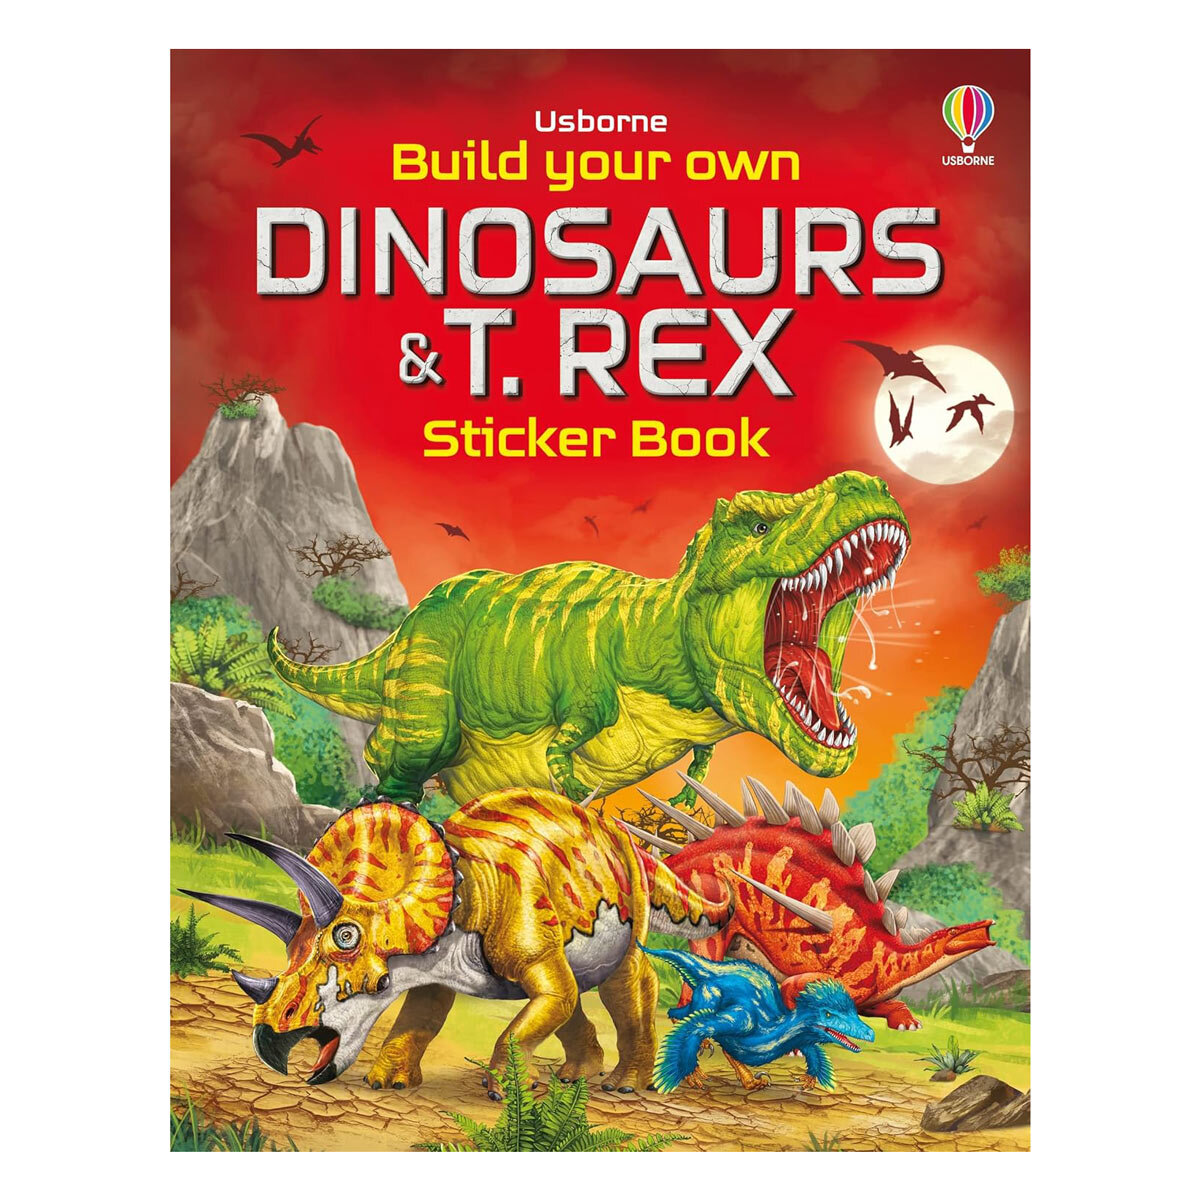 Dinosaurs & T.Rex